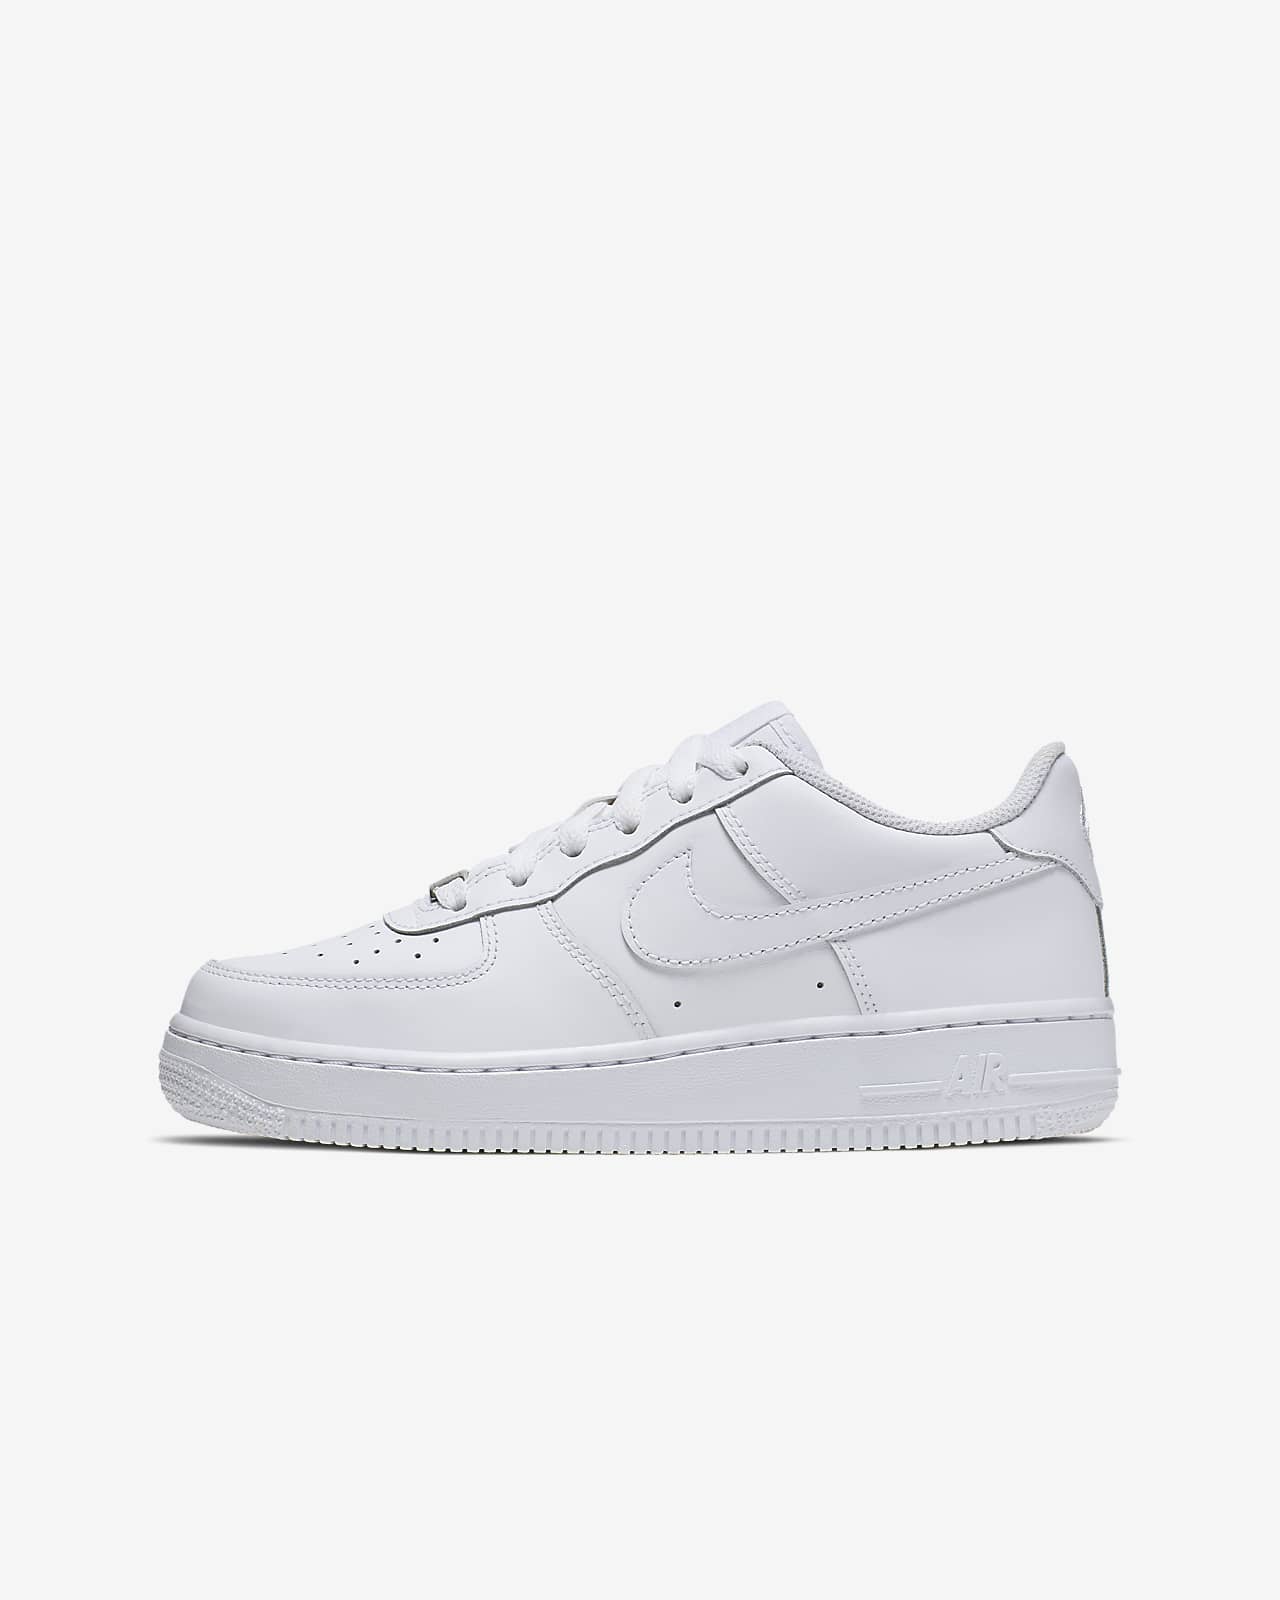 Nike Air Force 1 Schuh für ältere 